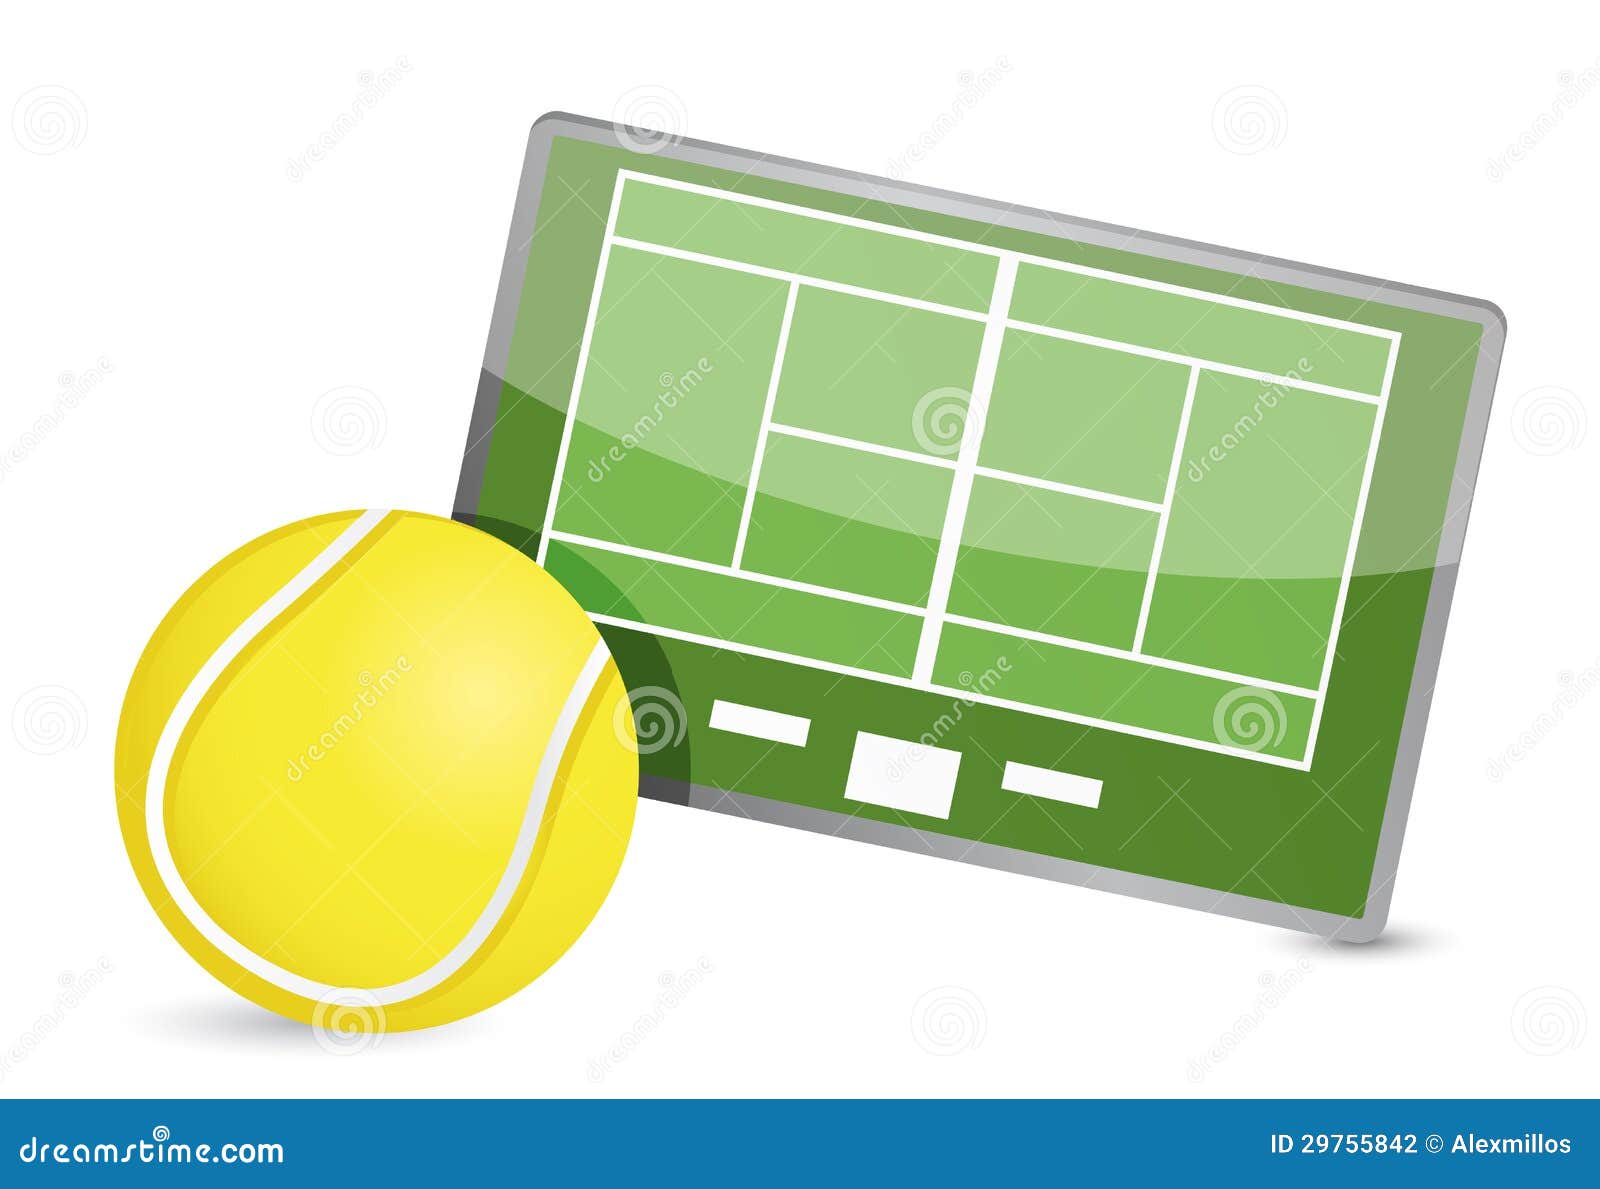 tennis field tactic table, tennis balls